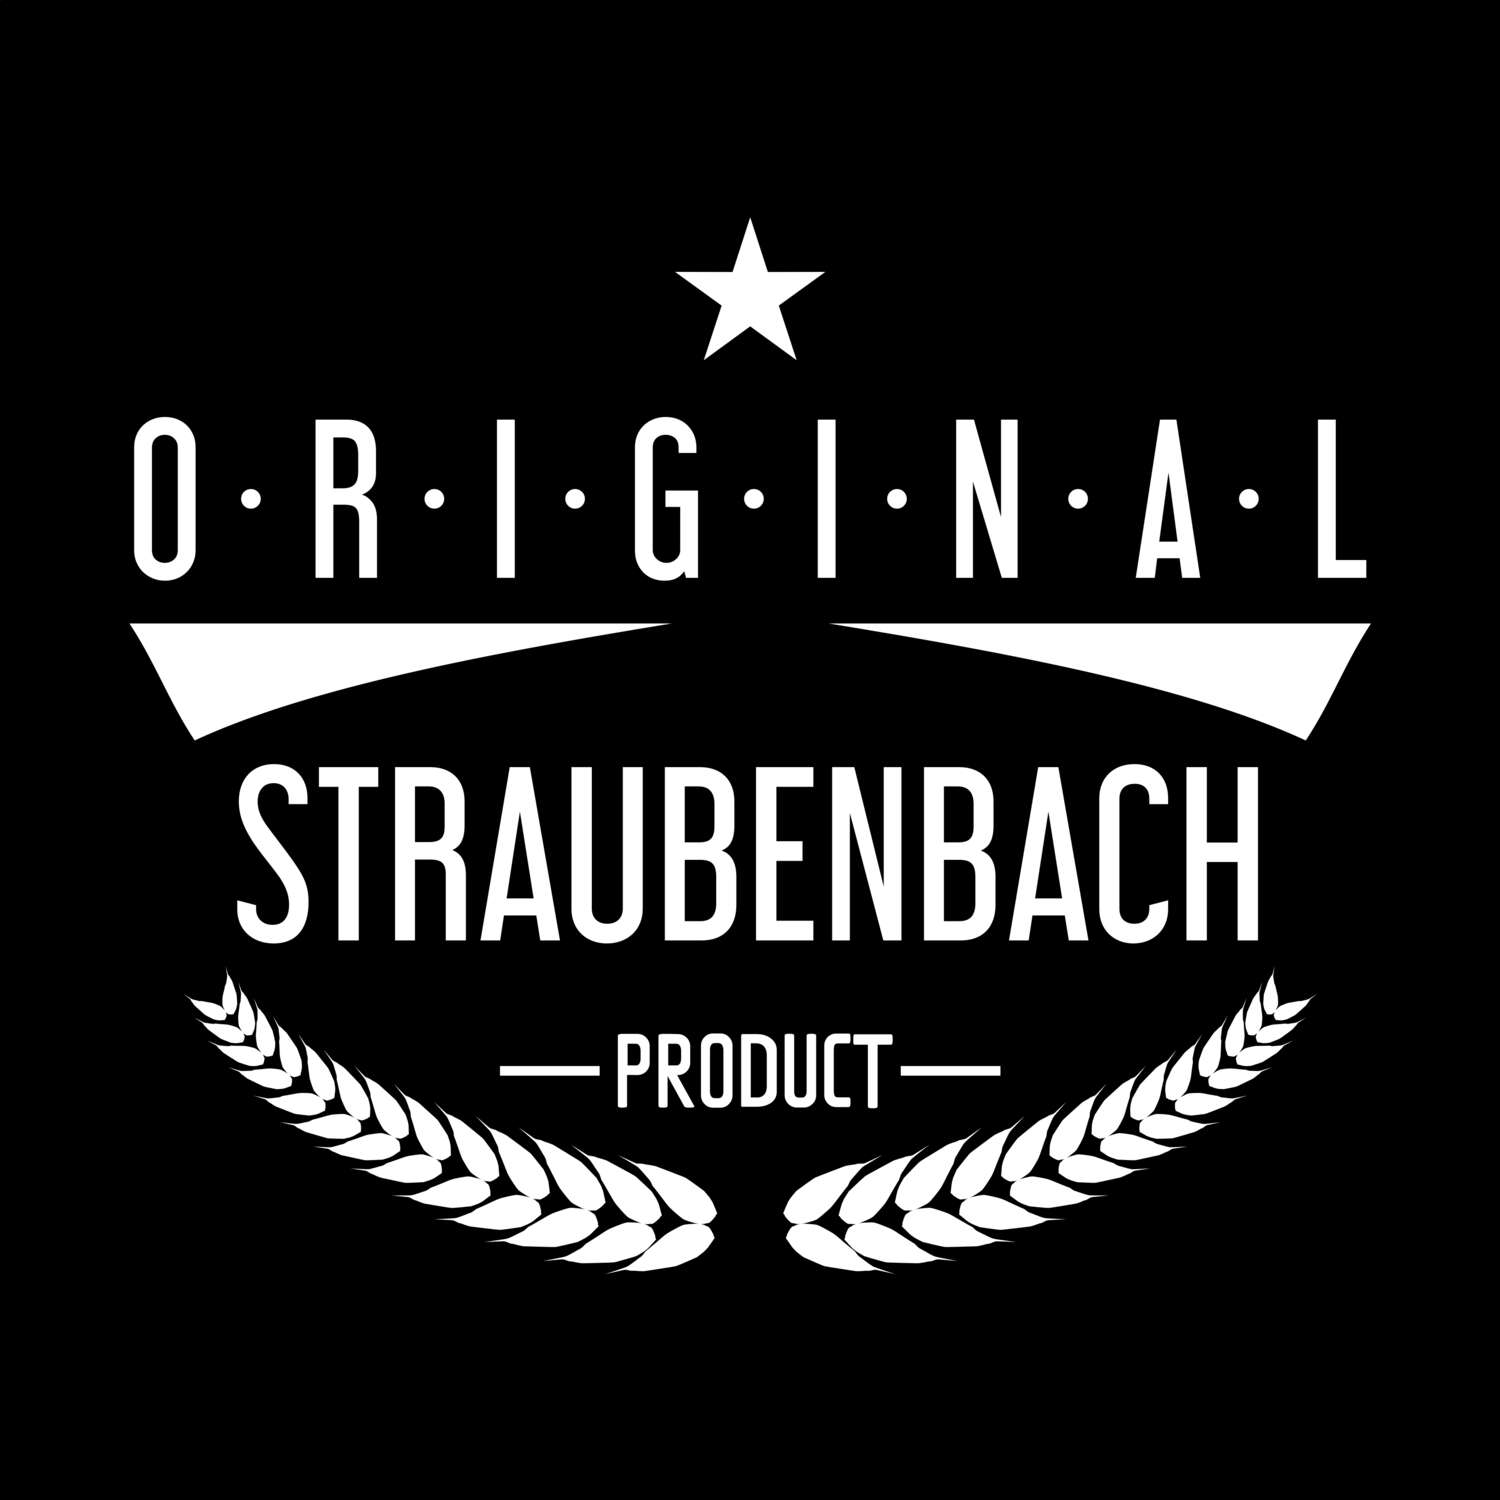 Straubenbach T-Shirt »Original Product«